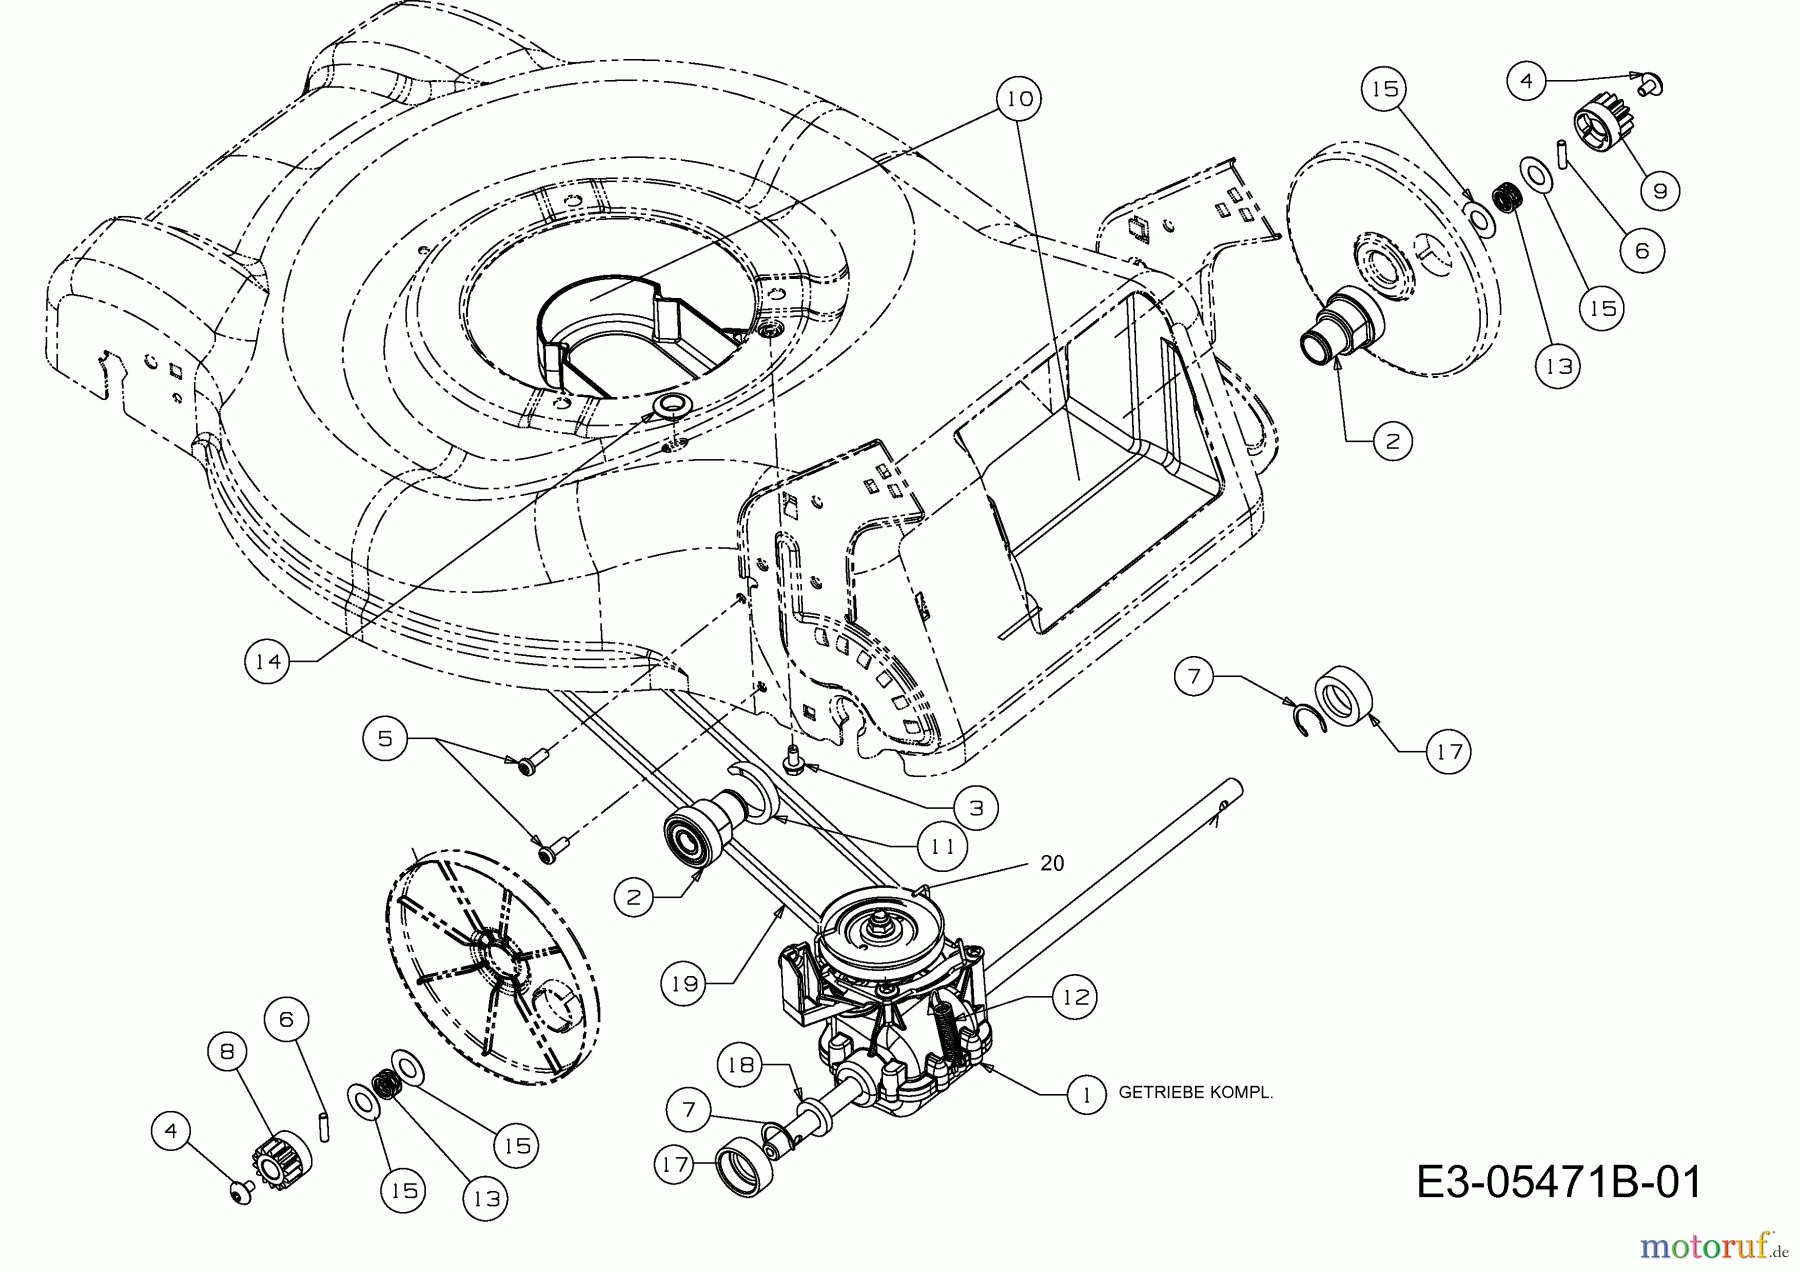  MTD Motormäher mit Antrieb SP 46 O 12D-J5M1615  (2012) Getriebe